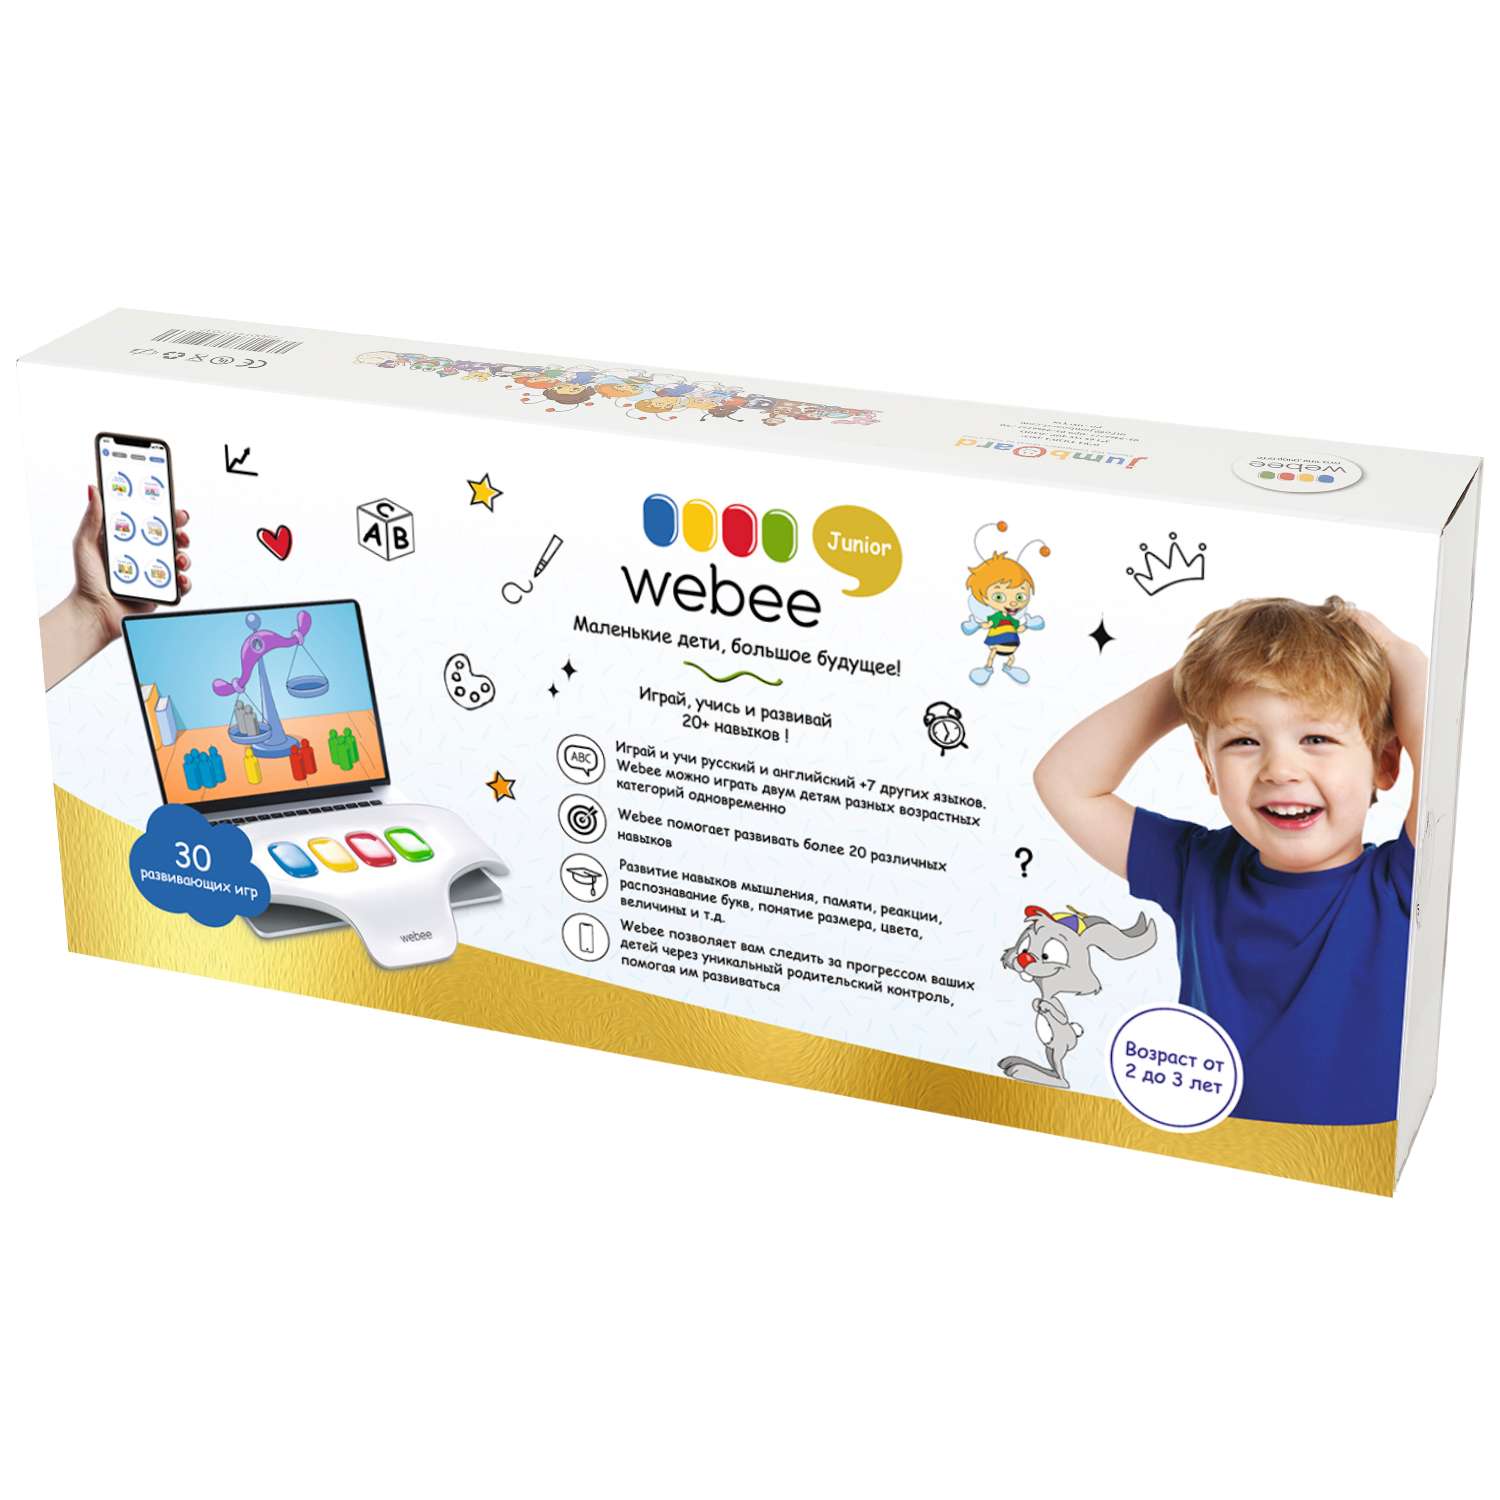 Игрушка Webee детский развивающий компьютер 20 игр W2 - фото 2